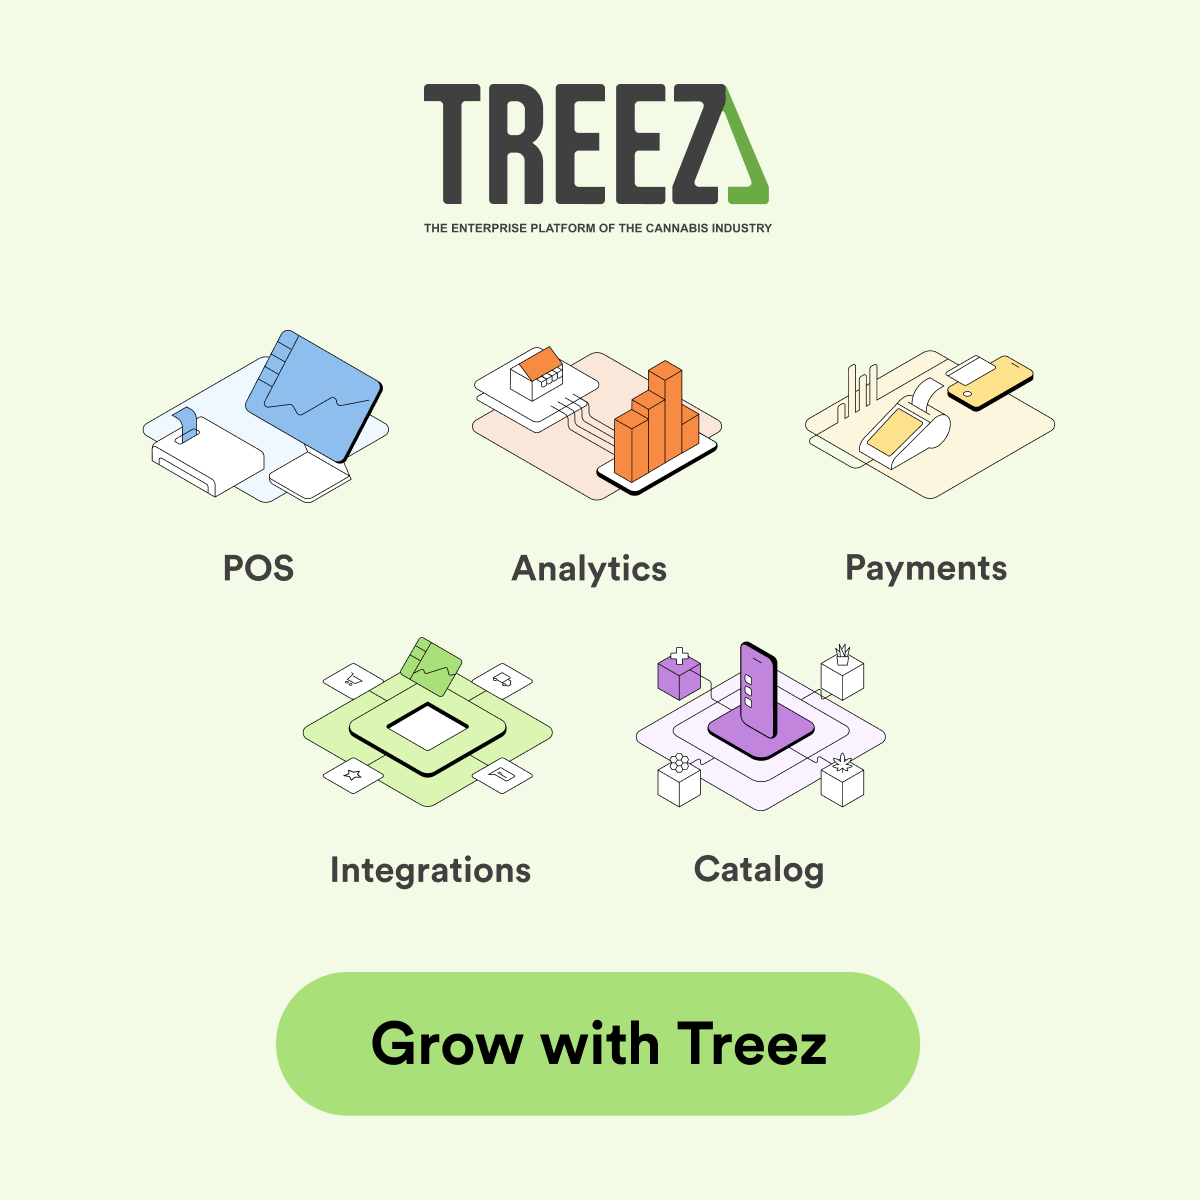 Treez